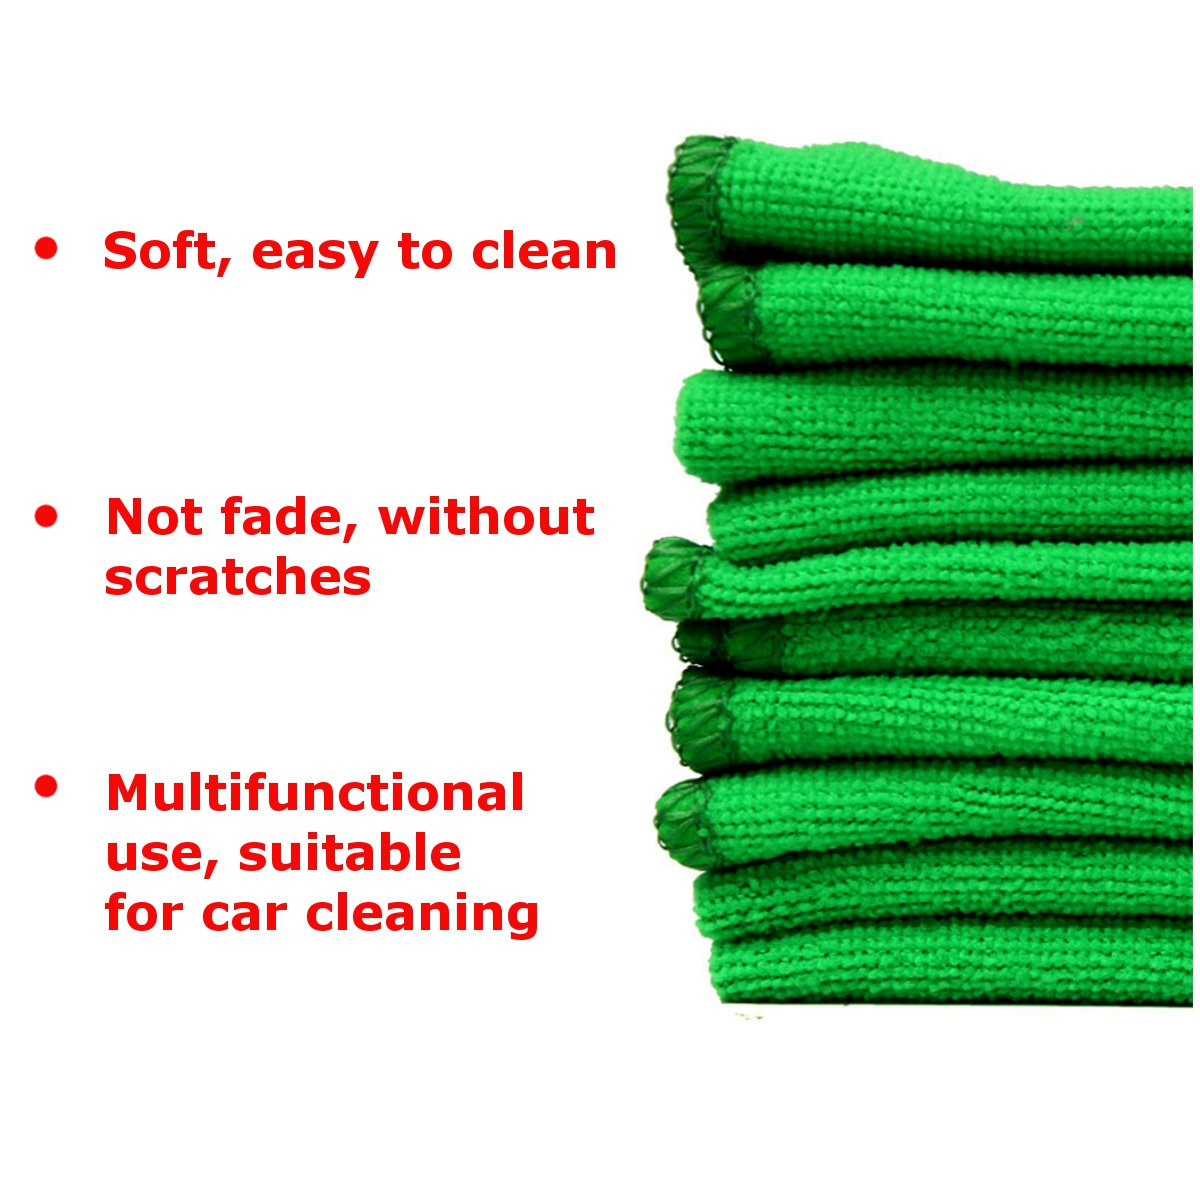 10Pcs Green Towel Duster Wash Micro Fiber Auto Car Detailing Cleaning Soft Cloth